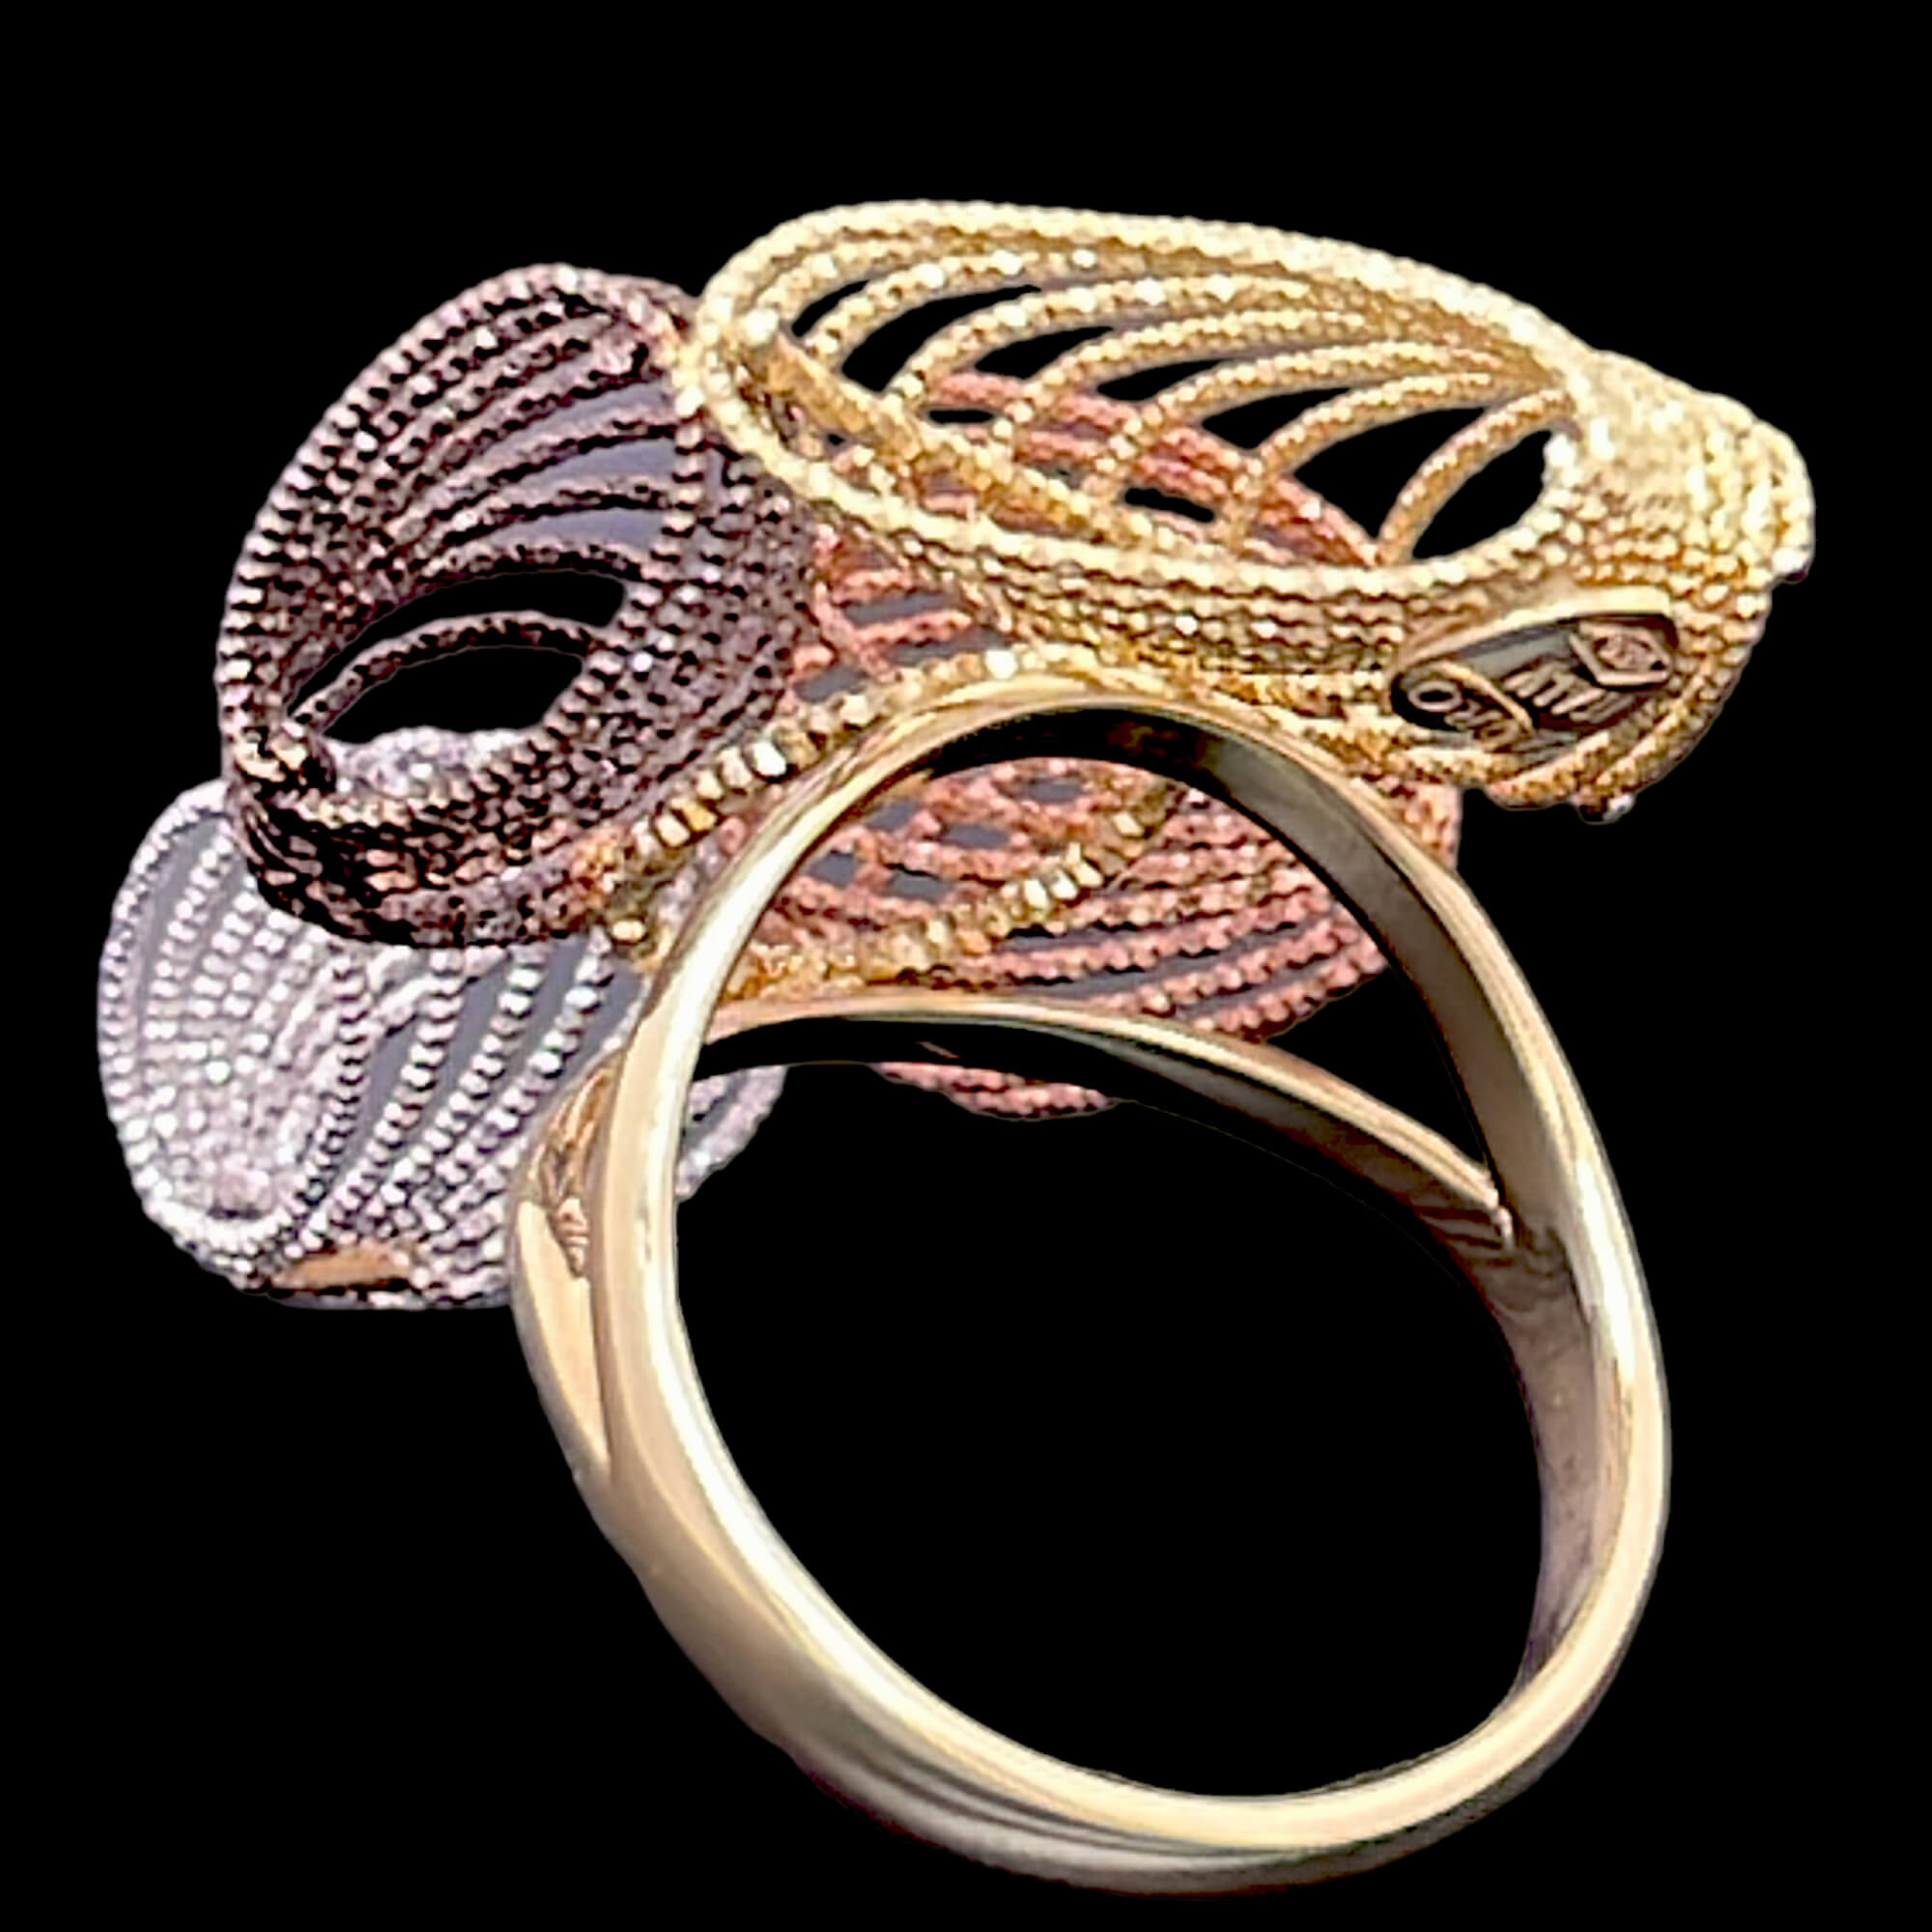 Bewerkte vierkleurige ring van 18kt goud